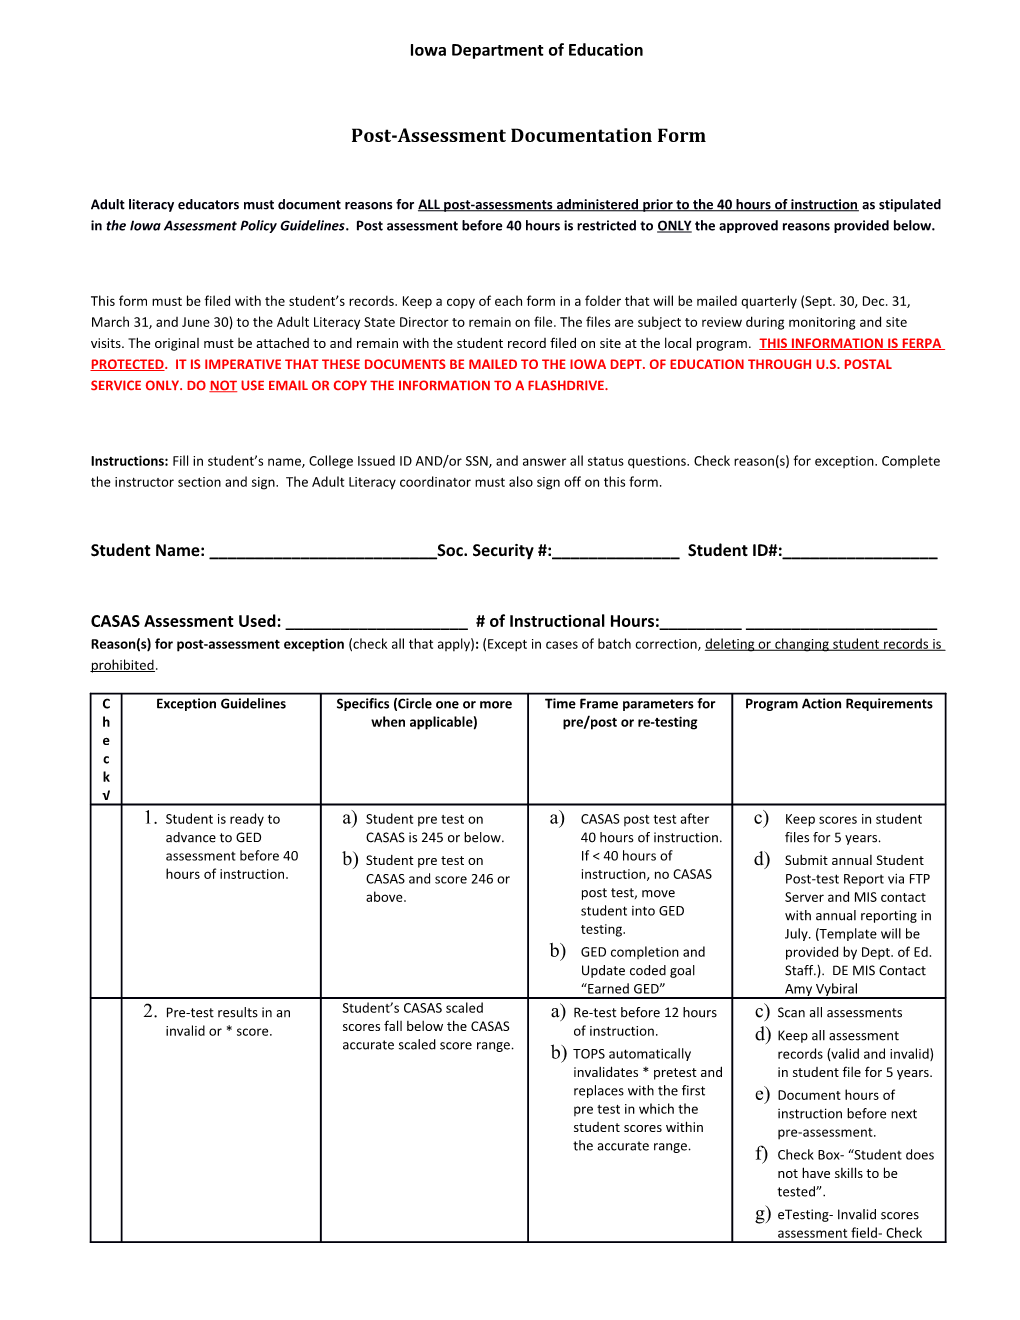 Post-Assessment Documentation Form